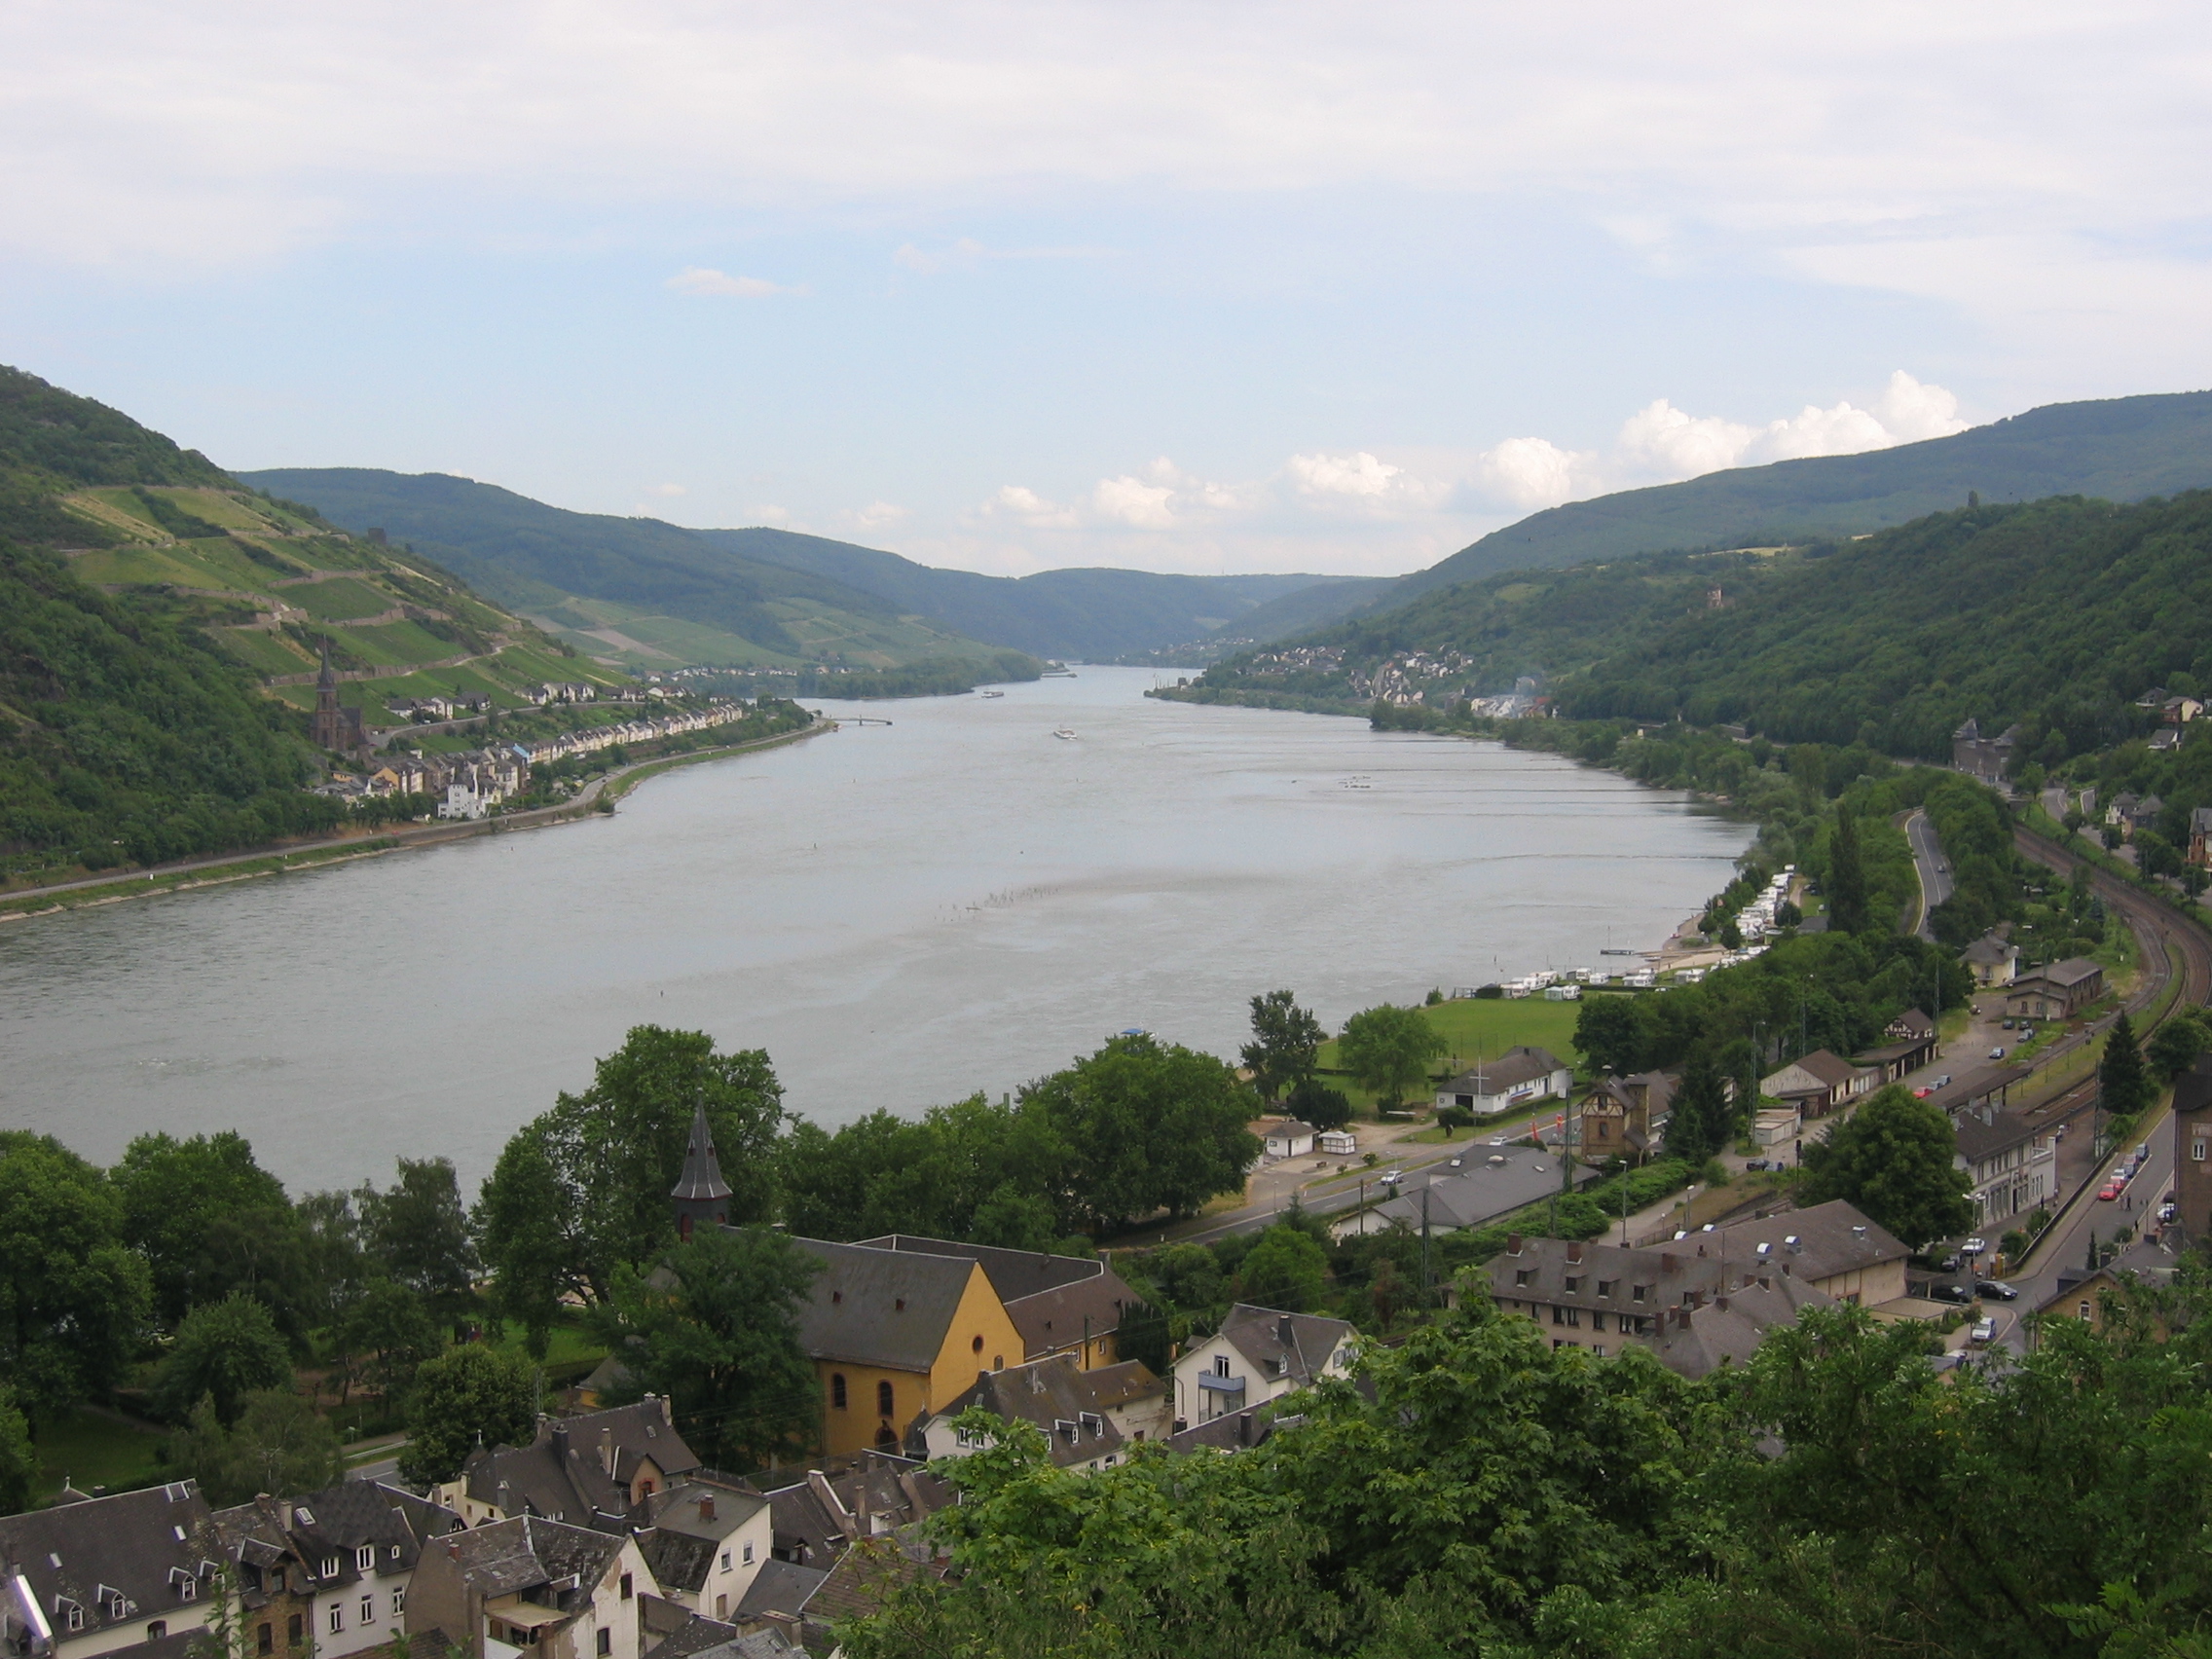 Along the Rhine River